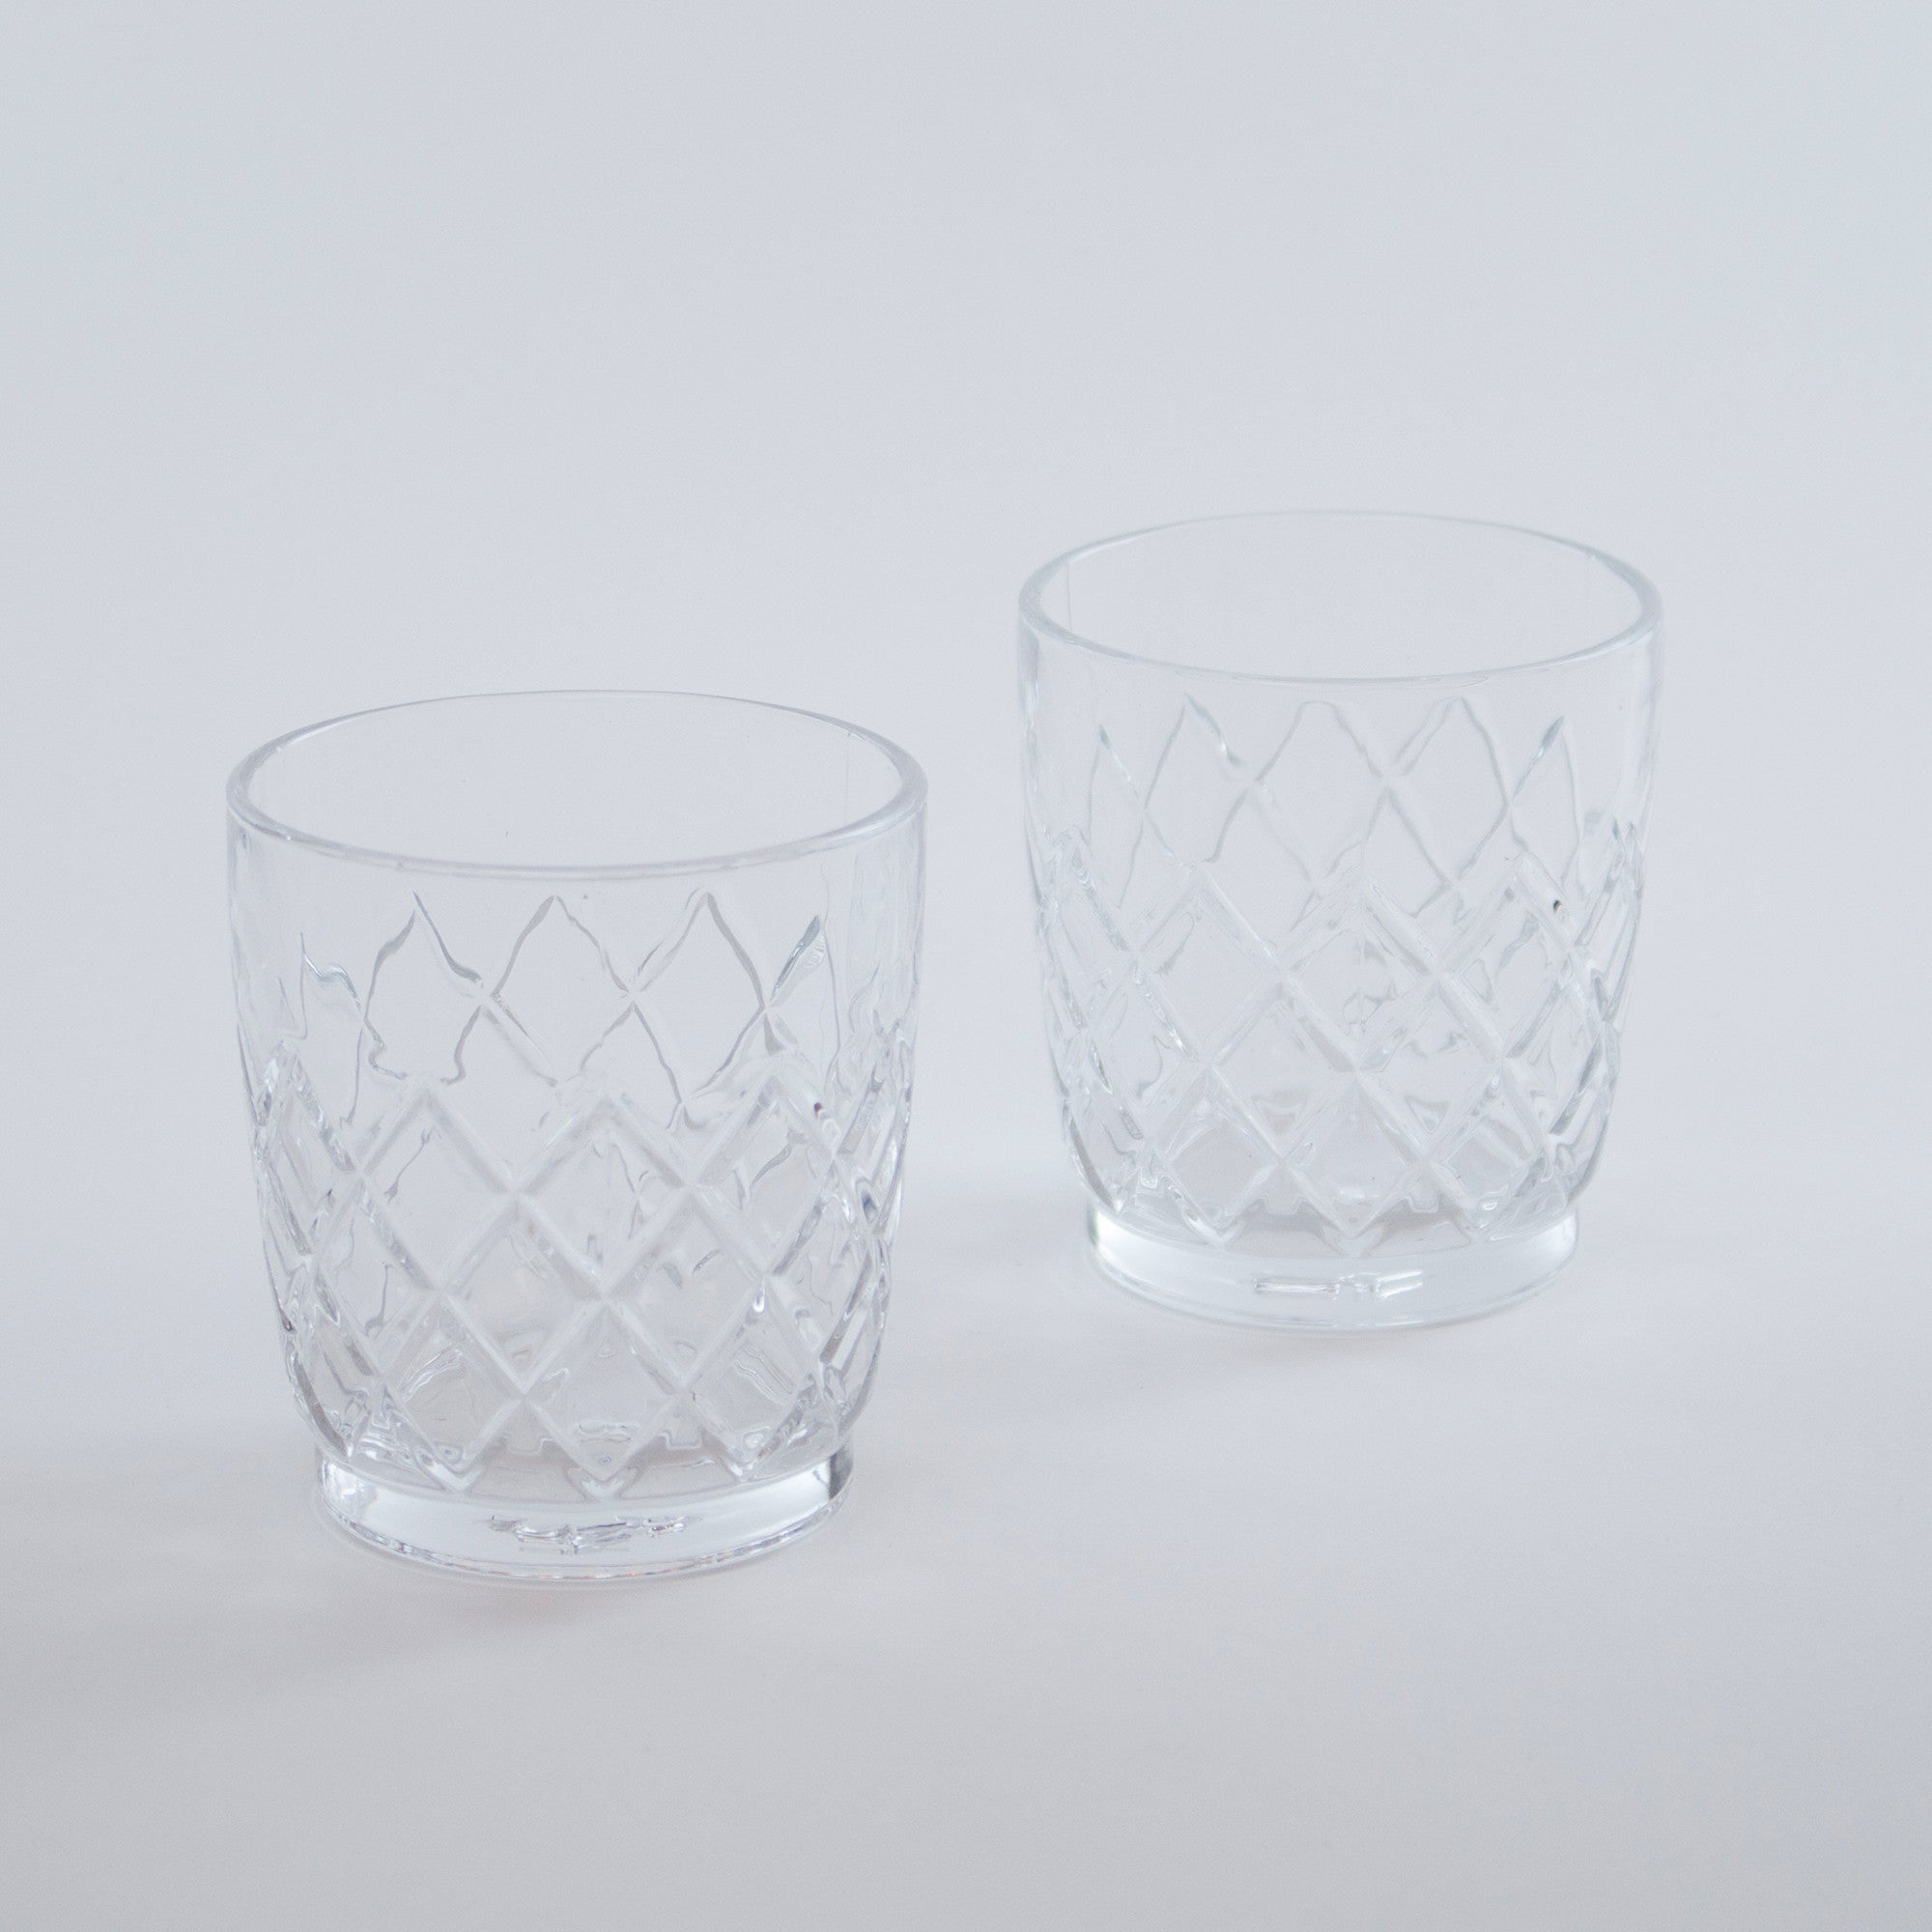 Schott Zwiesel Gin & Tonic Glasses (Set of 6) - The VinePair Store